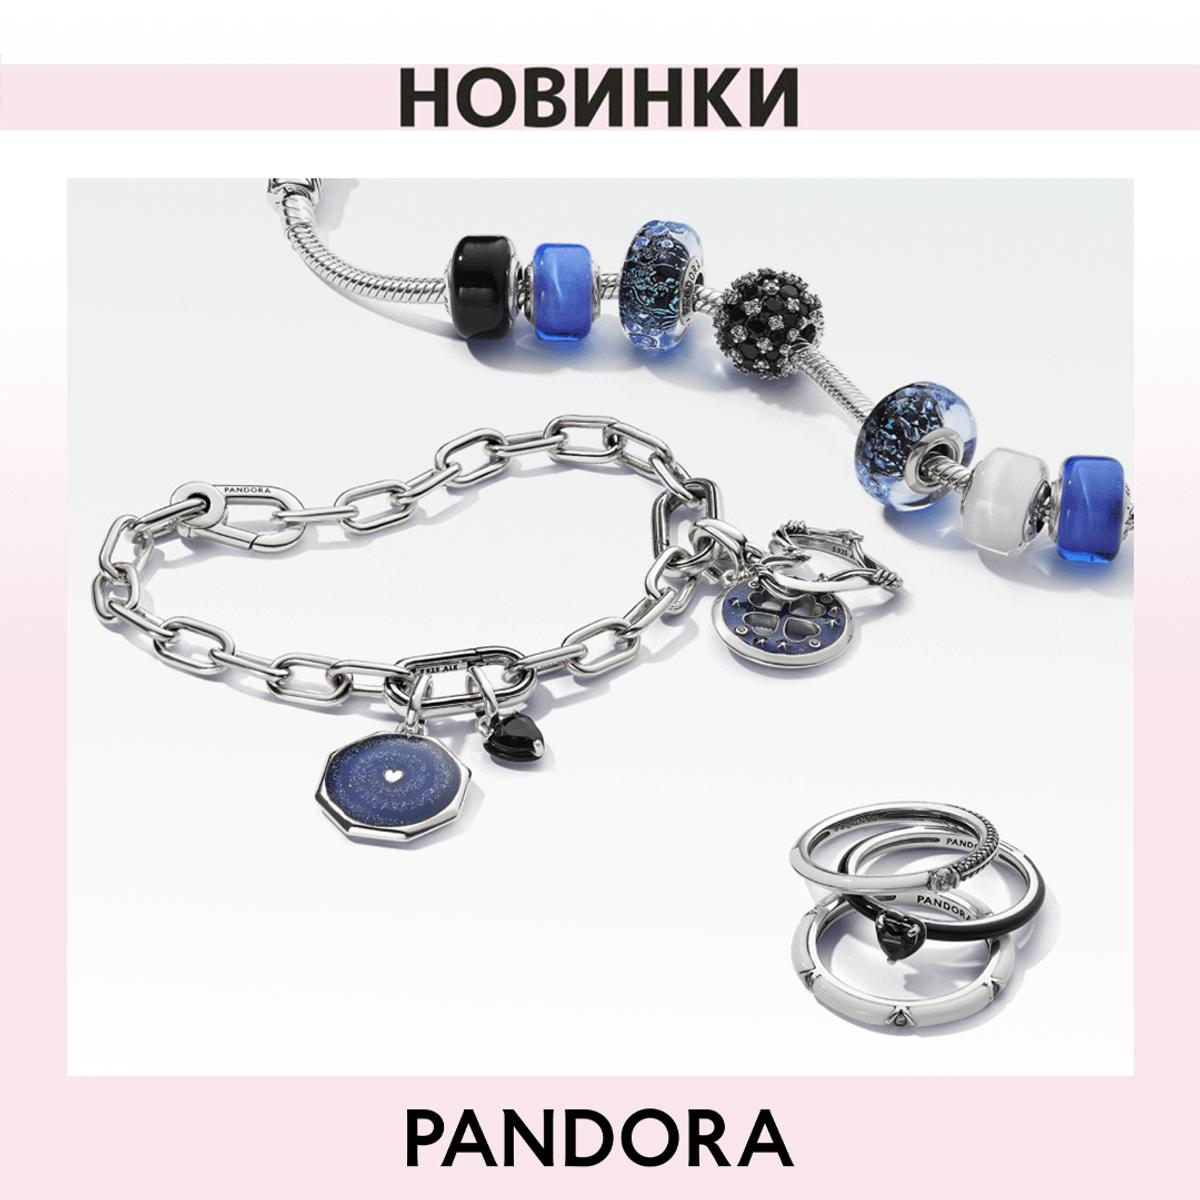 New Pandora jewelry